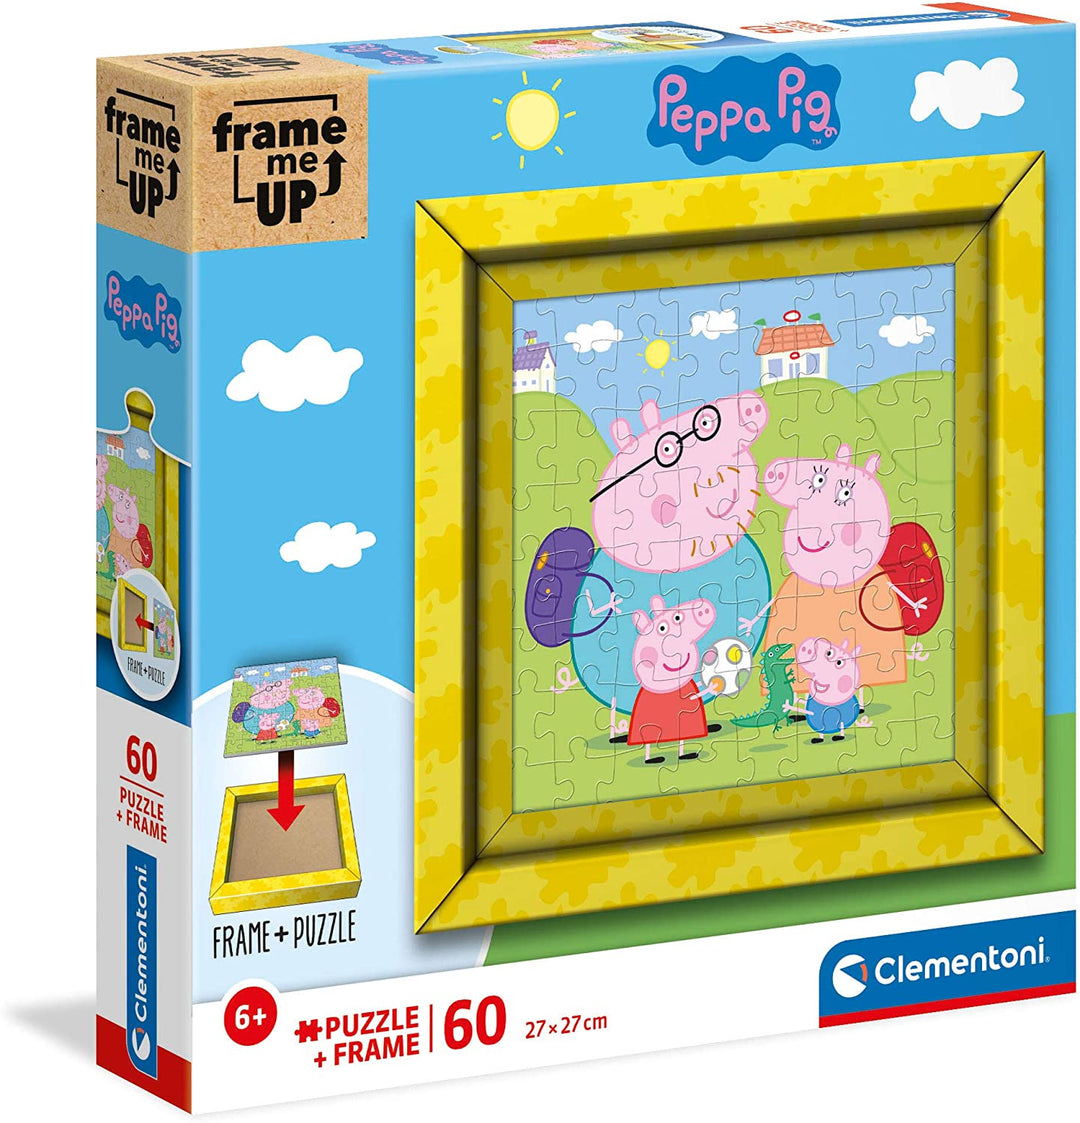 Clementoni 38809, Peppa Pig Frame Me Up Puzzle für Kinder – 60 Teile, ab 6 Jahren